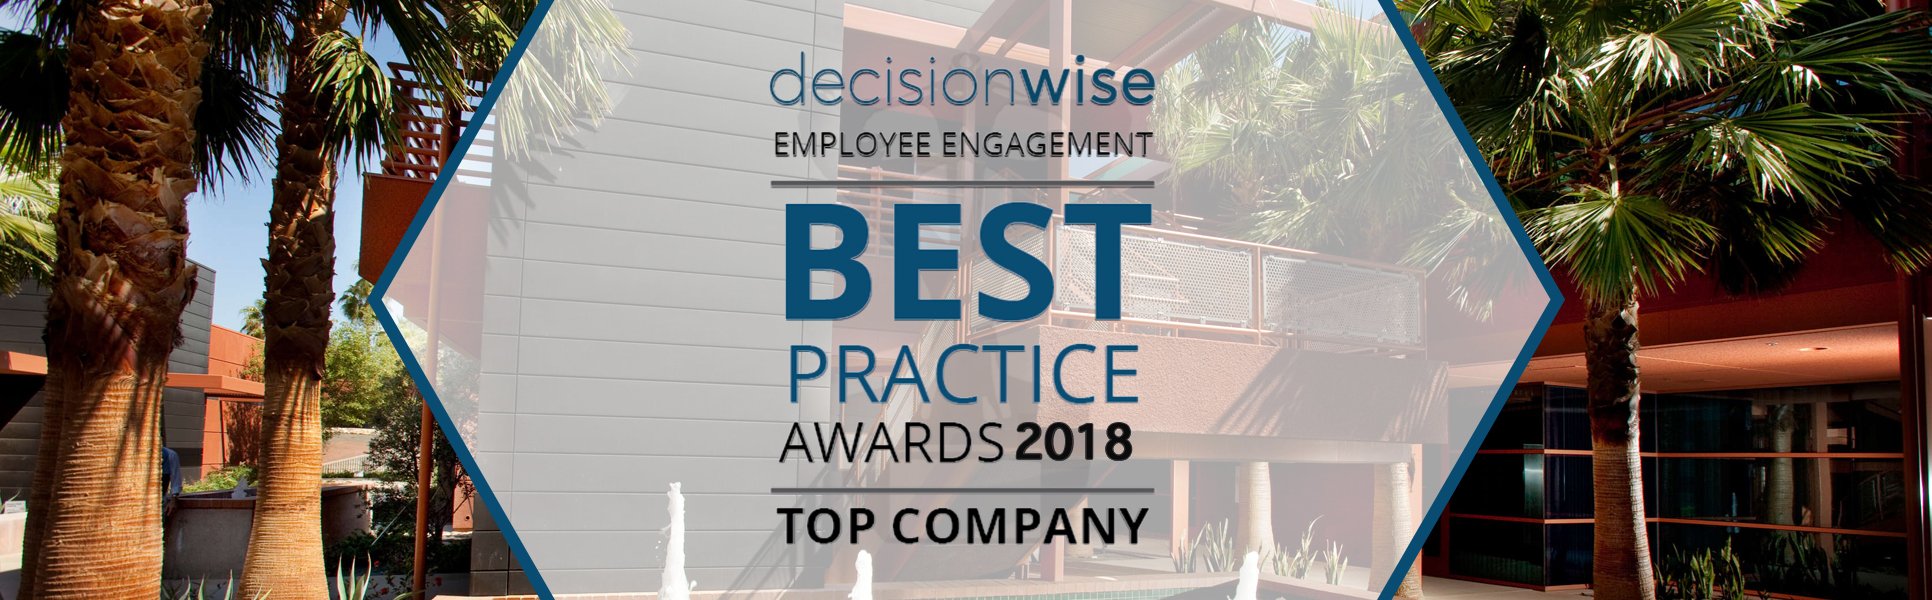 DecisionWise Employee Engagement Best Practice Award 2018 | DOHC